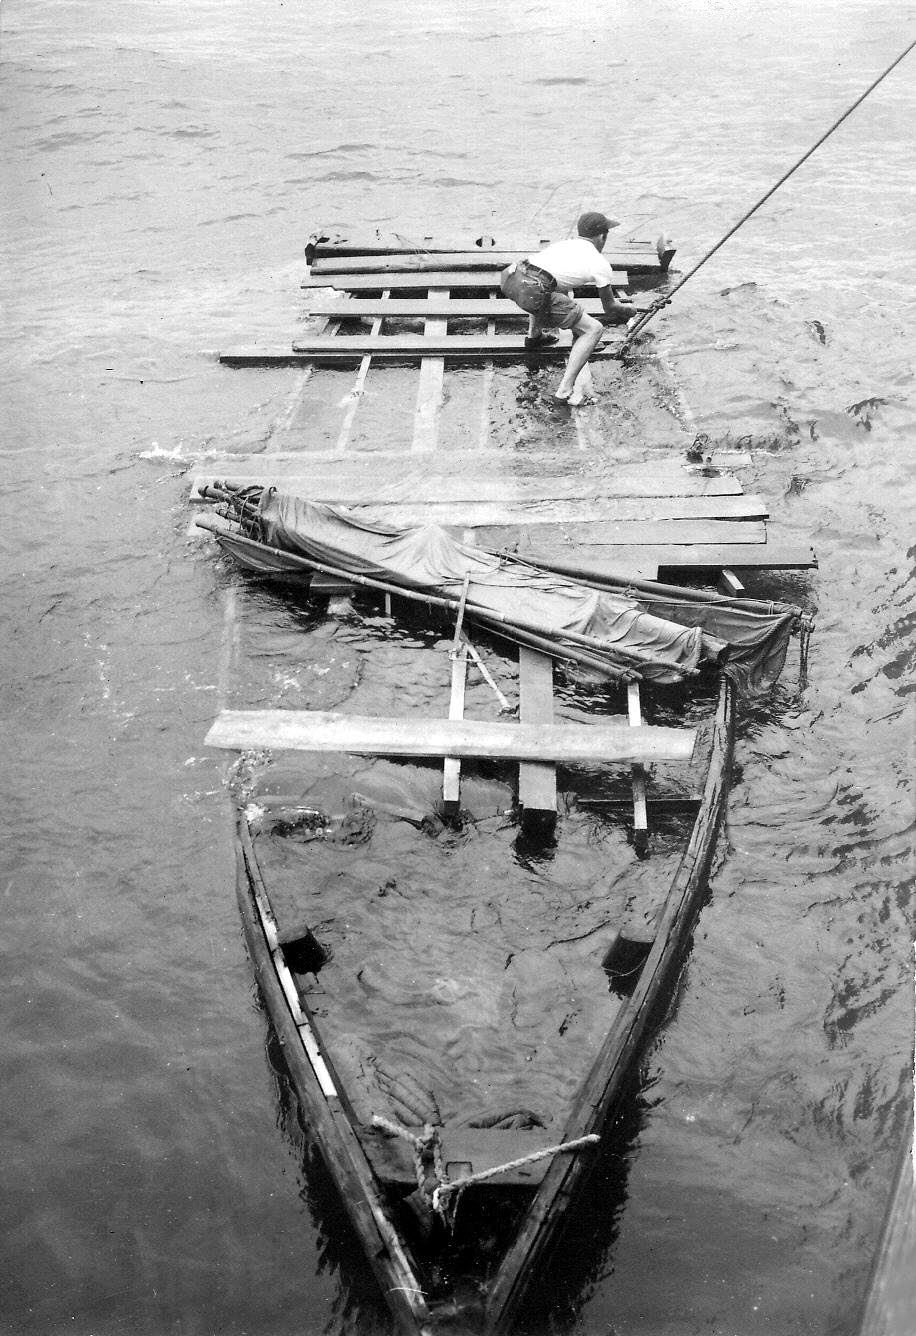 213_sampan_sunk_by_small_boat_action_1952.jpg